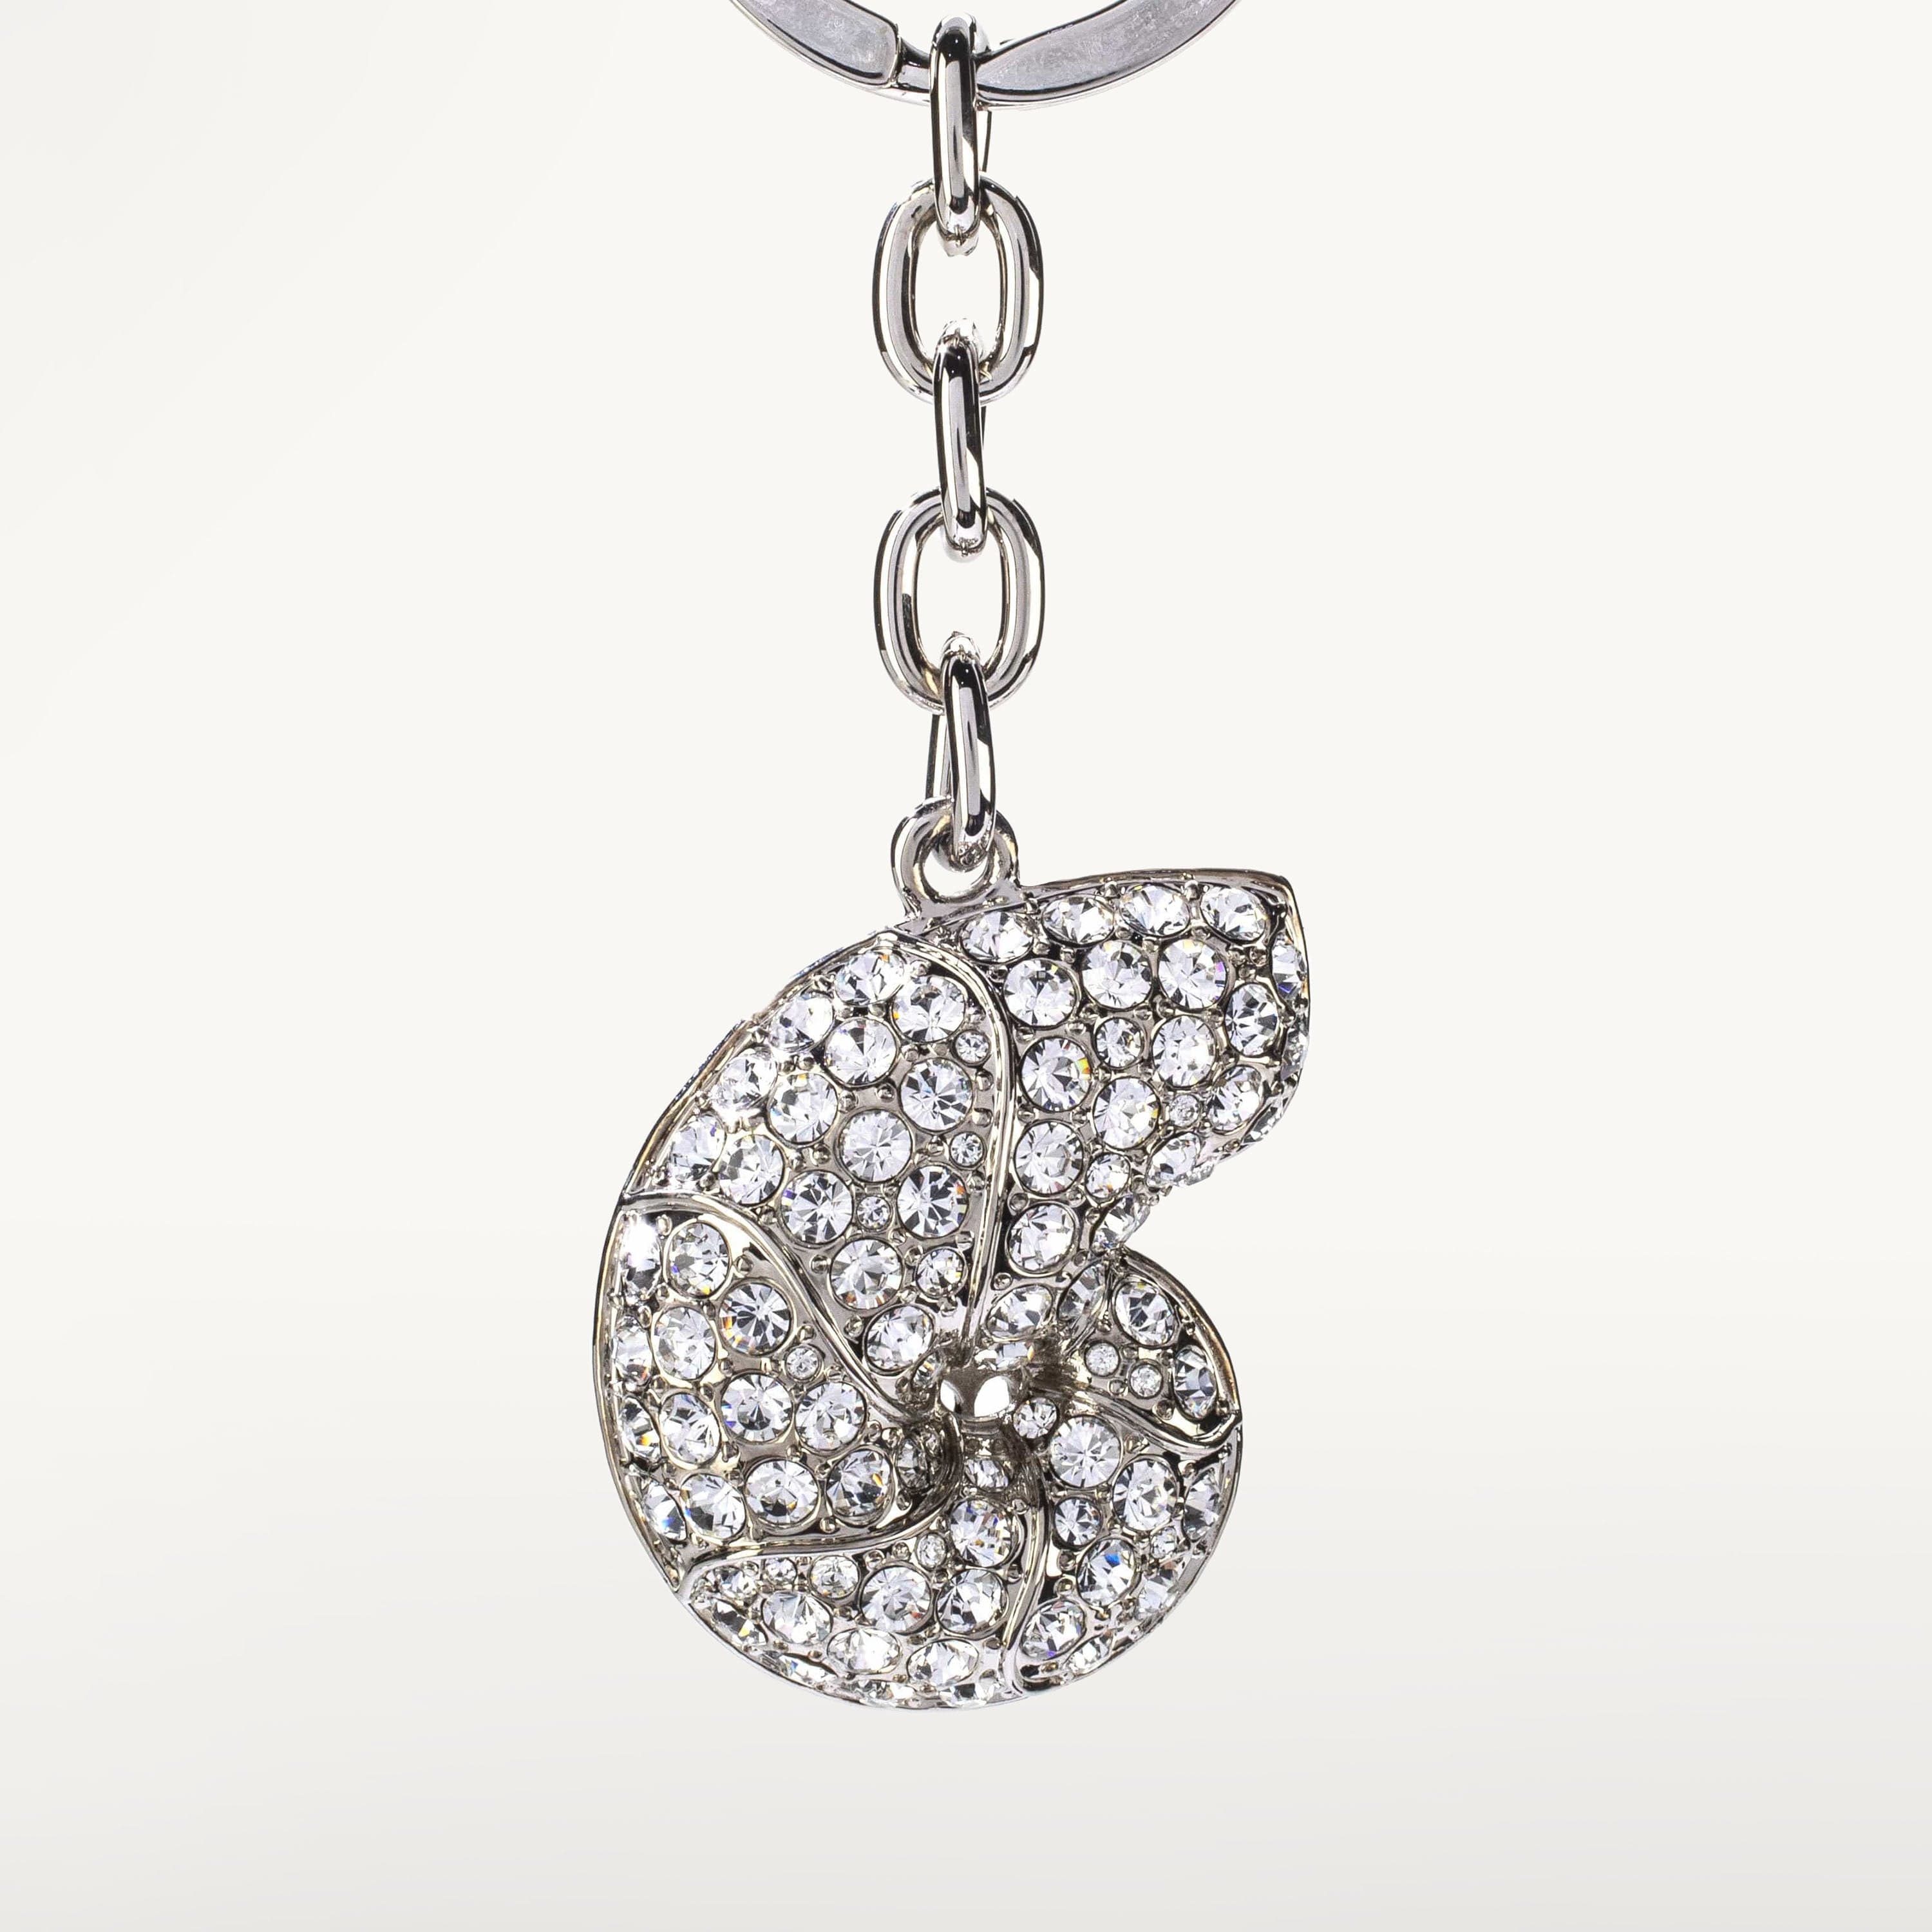 Kalifano Crystal Keychains Seashell Keychain made with Swarovski Crystals SKC-095